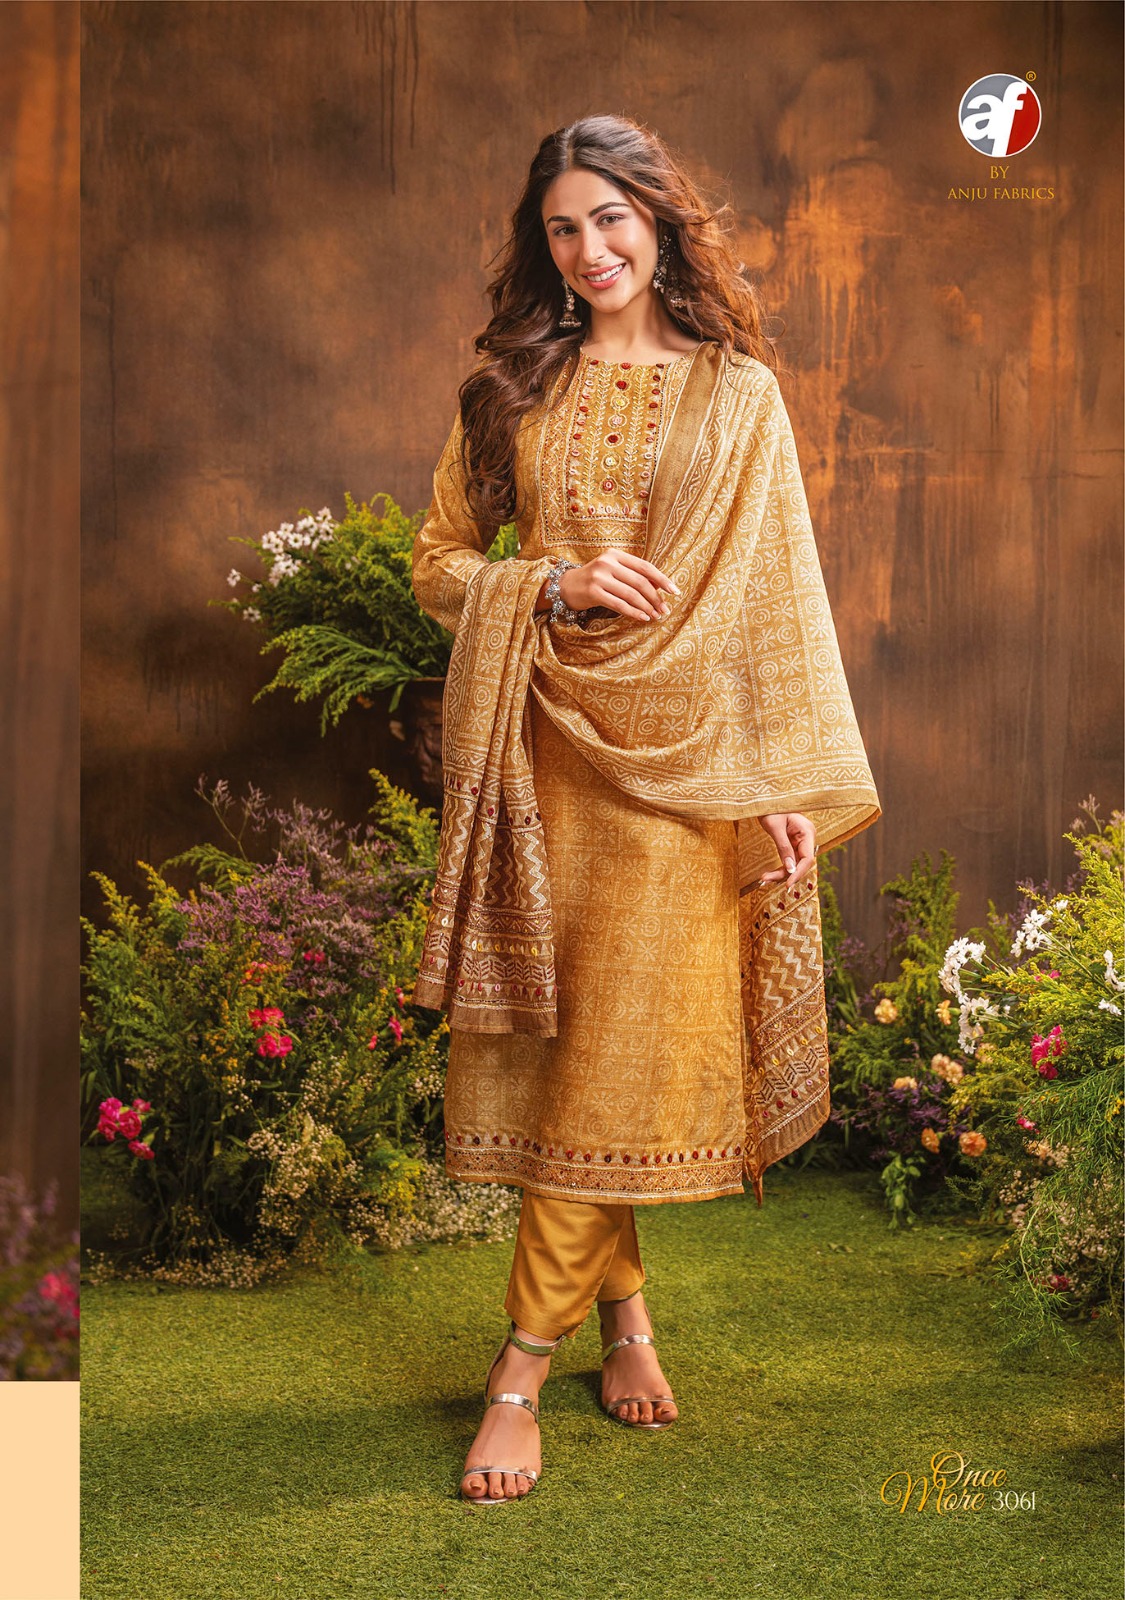 Anju Fabrics Once More Vol 2 Designer Wedding Party Salwar Suits collection 3